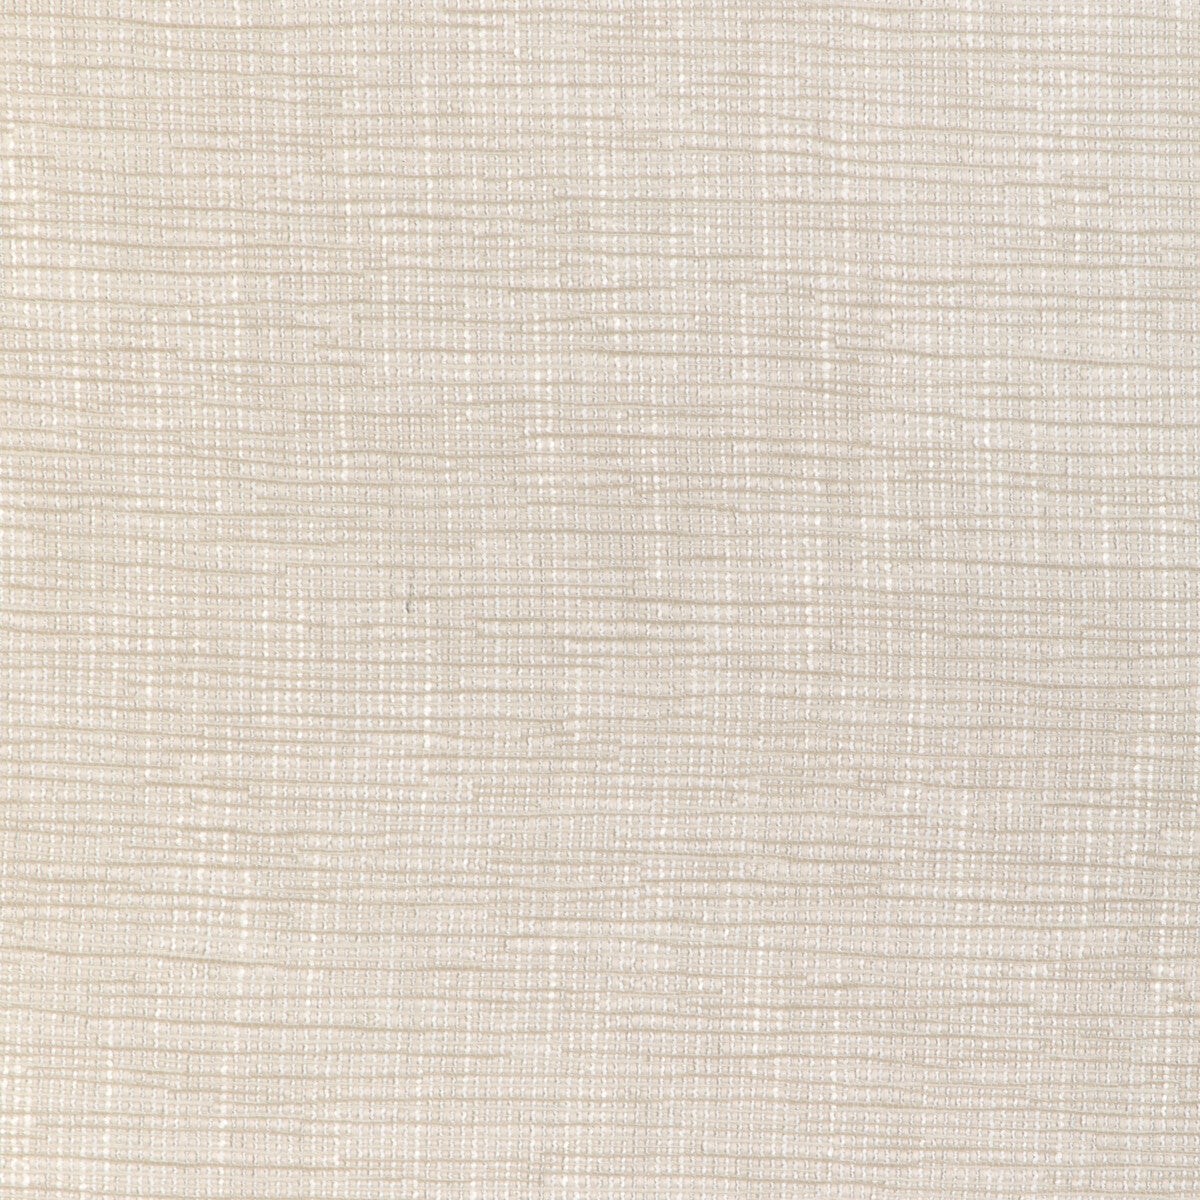 Kravet Smart fabric in 36668-1 color - pattern 36668.1.0 - by Kravet Smart in the Performance Kravetarmor collection